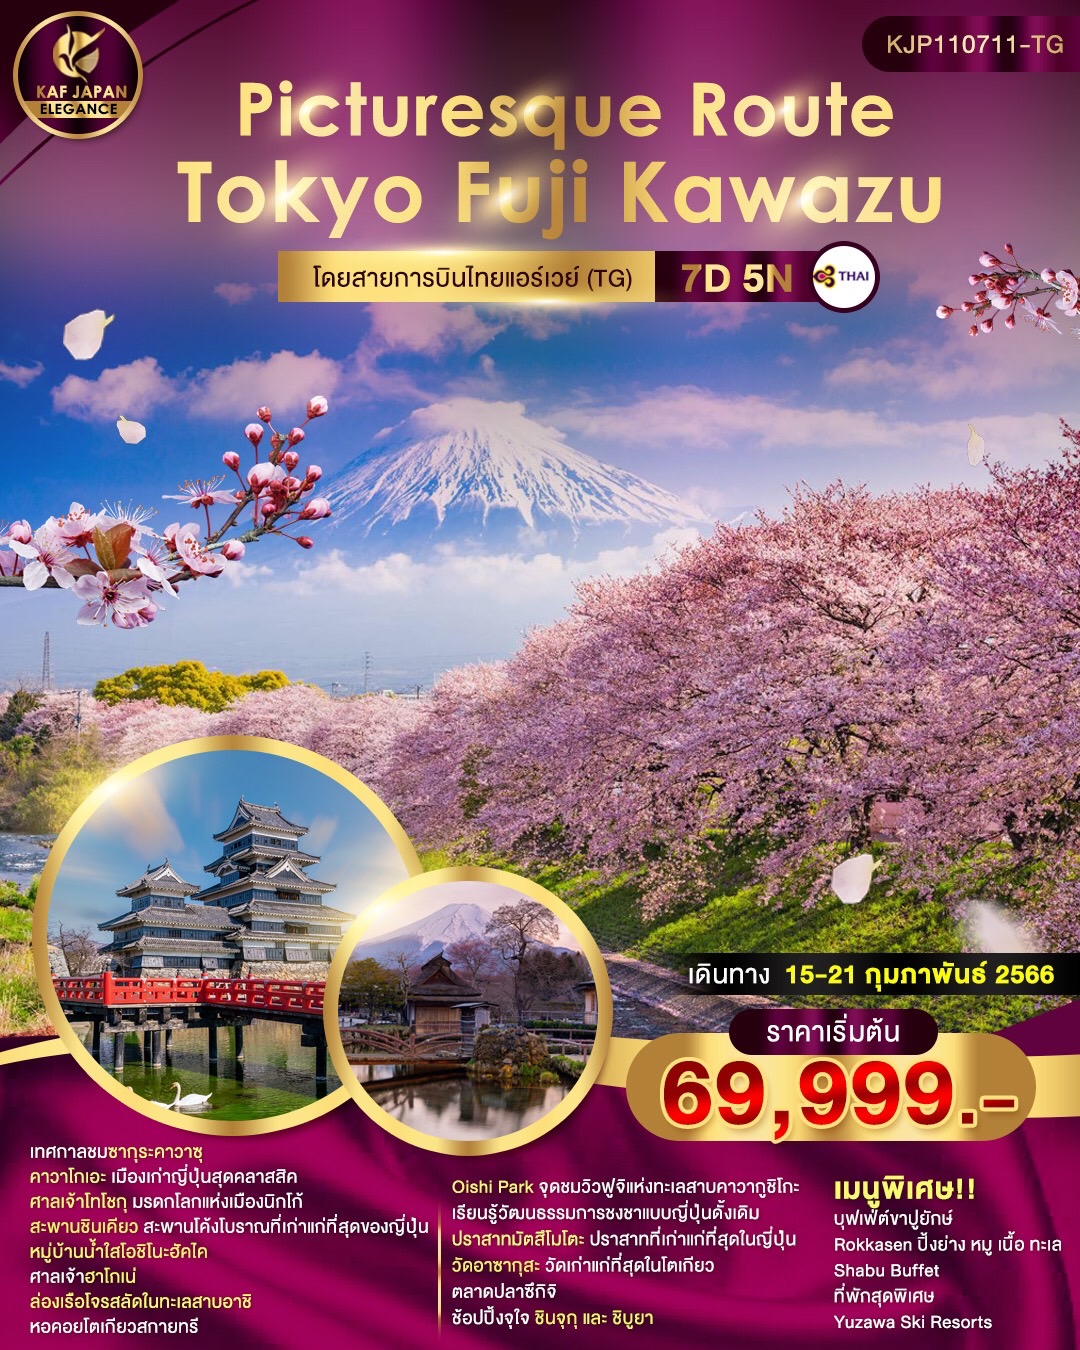 Picturesque Route Tokyo Fuji Kawazu